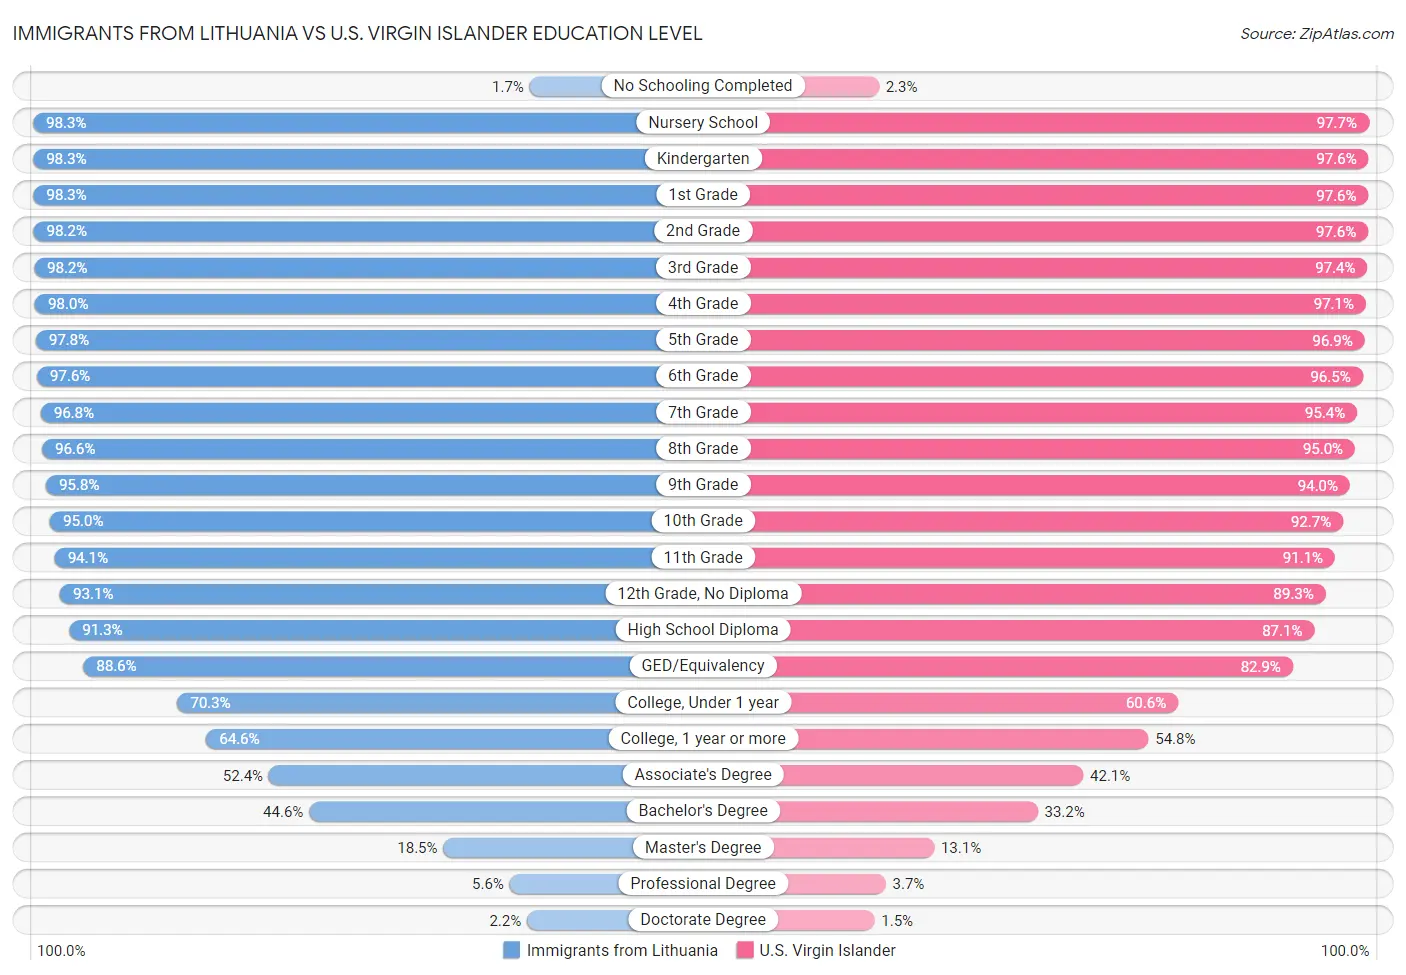 Immigrants from Lithuania vs U.S. Virgin Islander Education Level